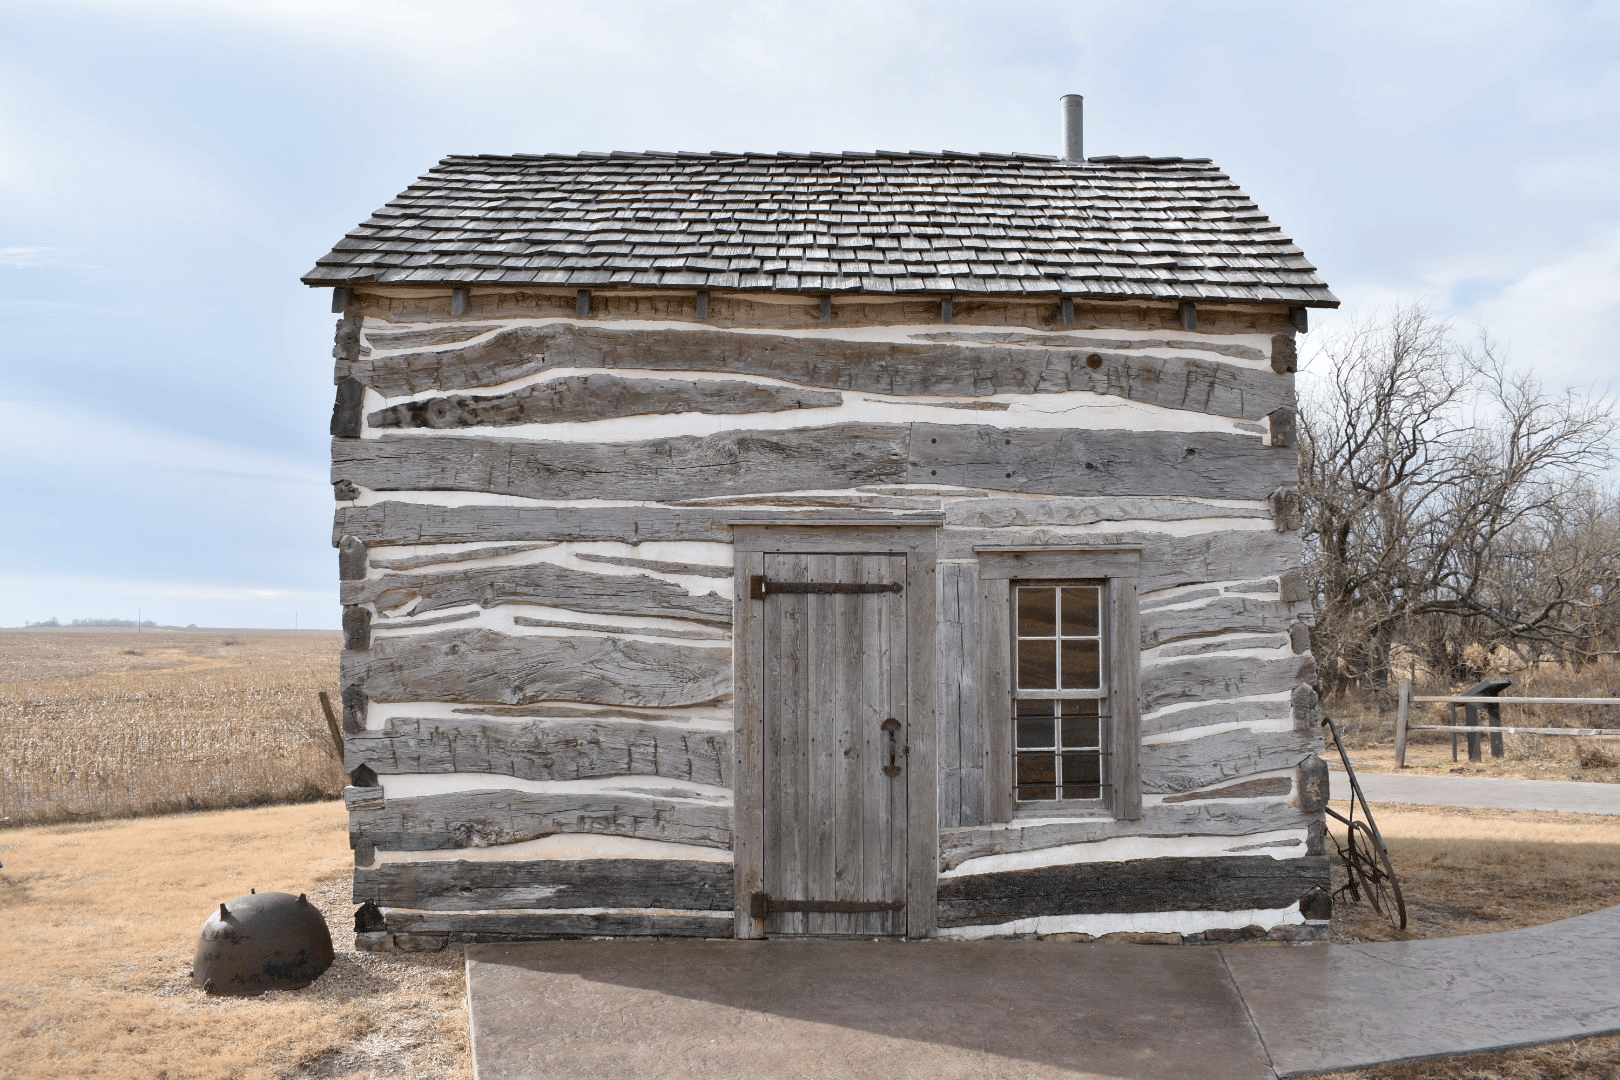 Palmer-Epard Cabin with interpretive equipment and open prairie landscape